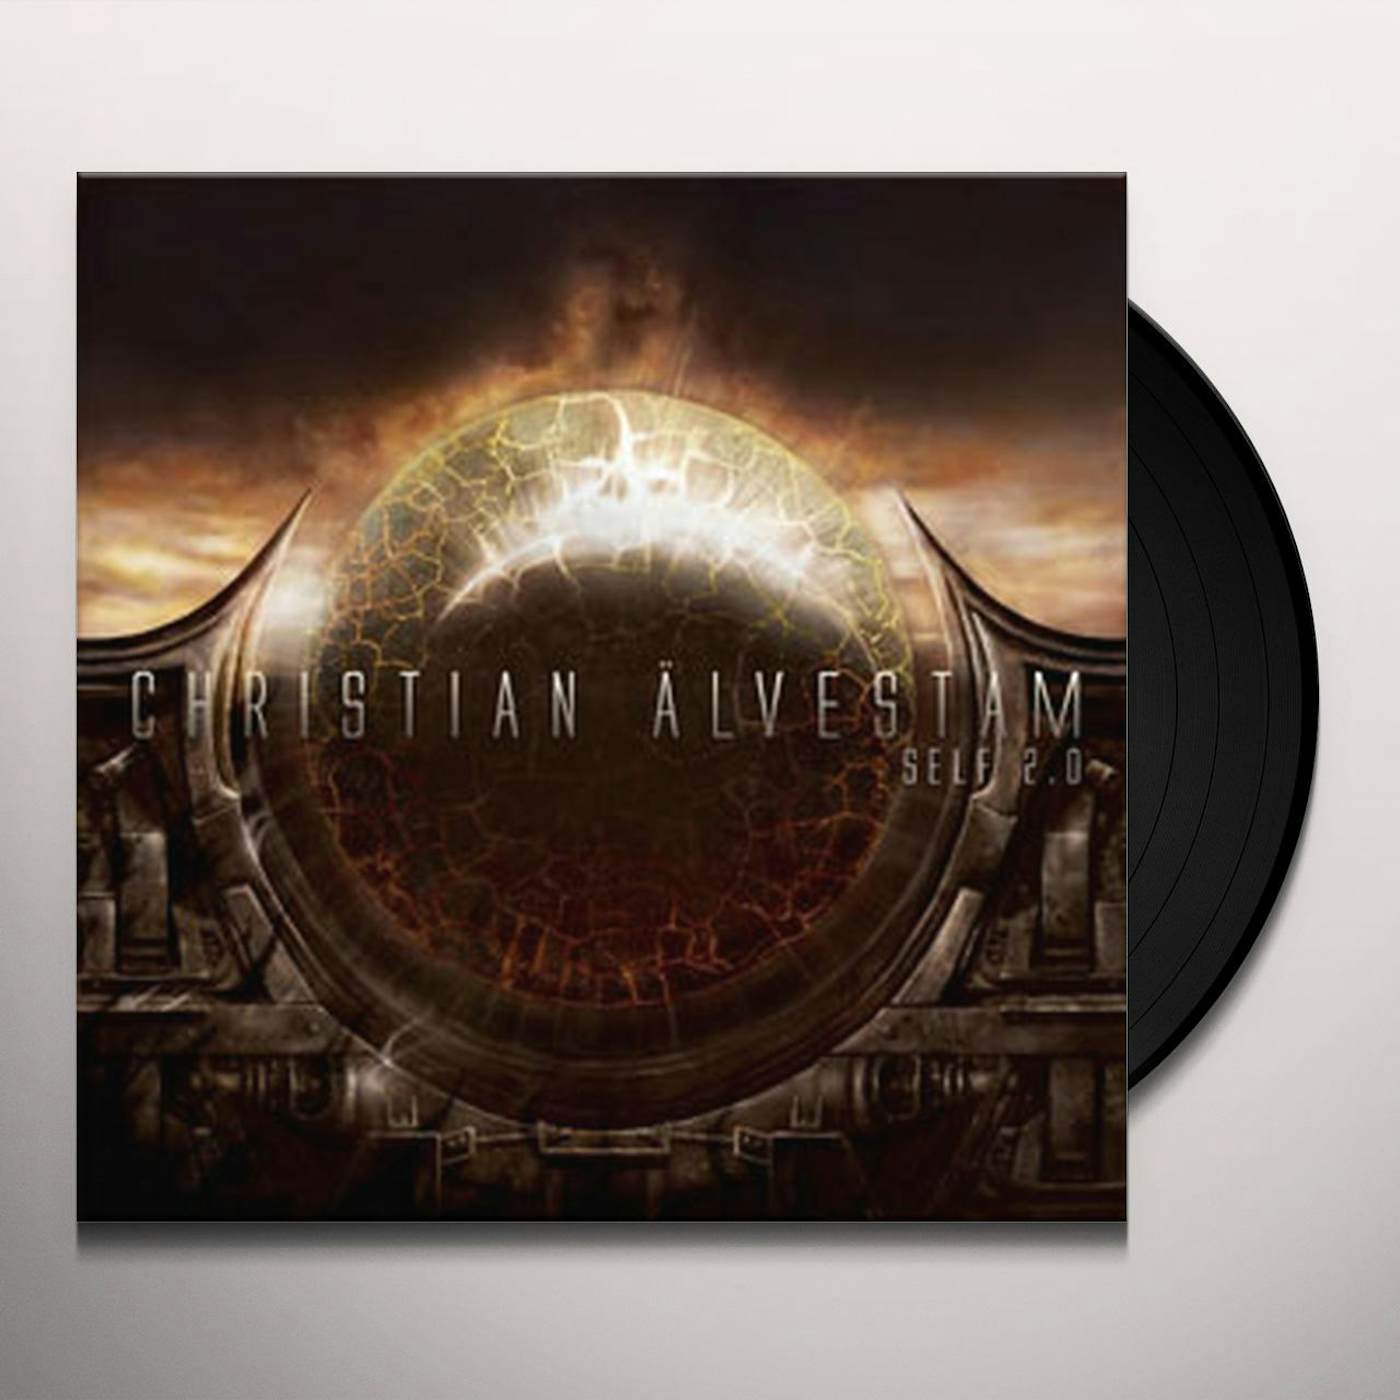 Christian Älvestam Self 2.0 Vinyl Record